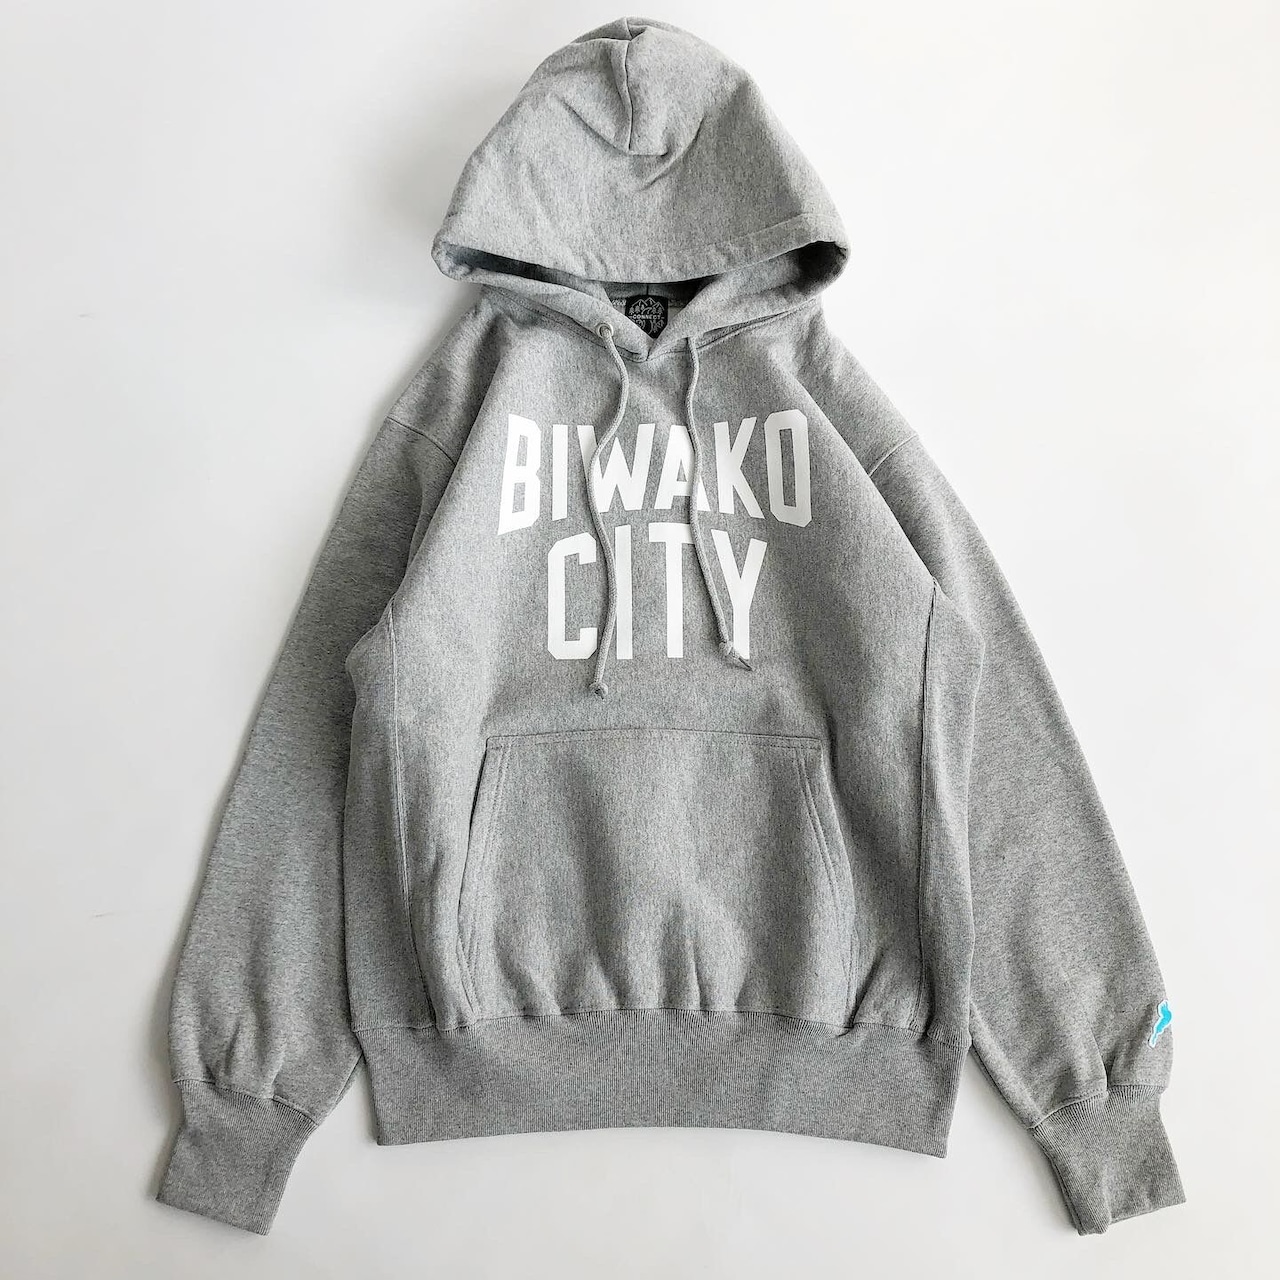 BIWAKO CITY / BASIC LOGO SWEAT PARKA / HEAVY WEIGHT